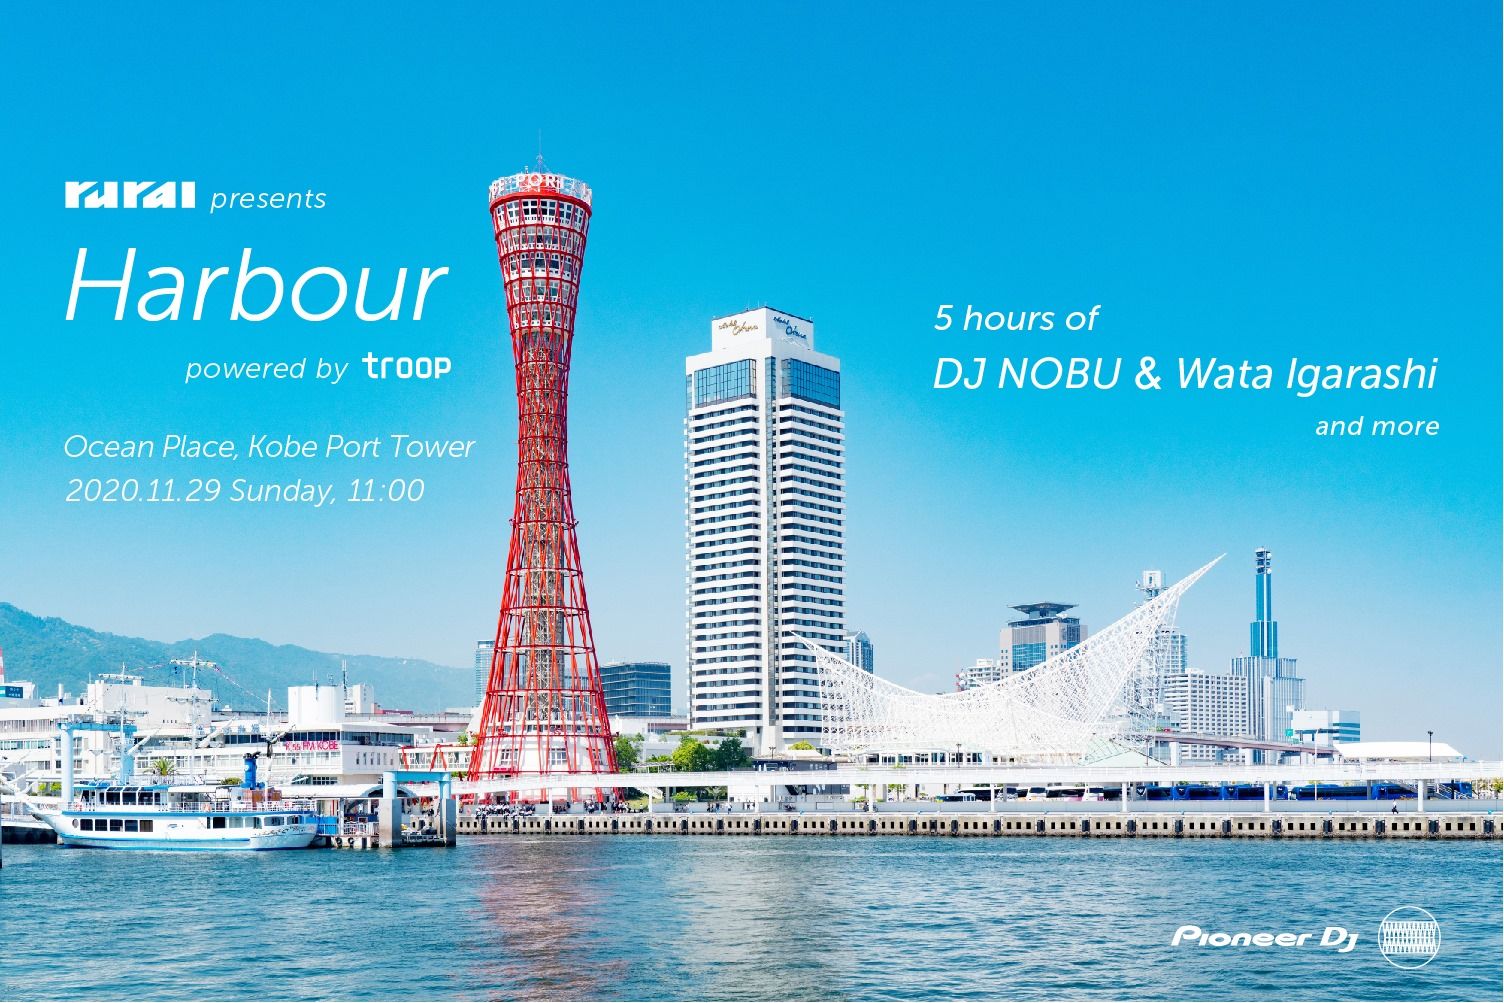 「rural」がオーシャンプレイスと神戸ポートタワーで開催！DJ NobuとWata Igarashiが5時間セットを披露
